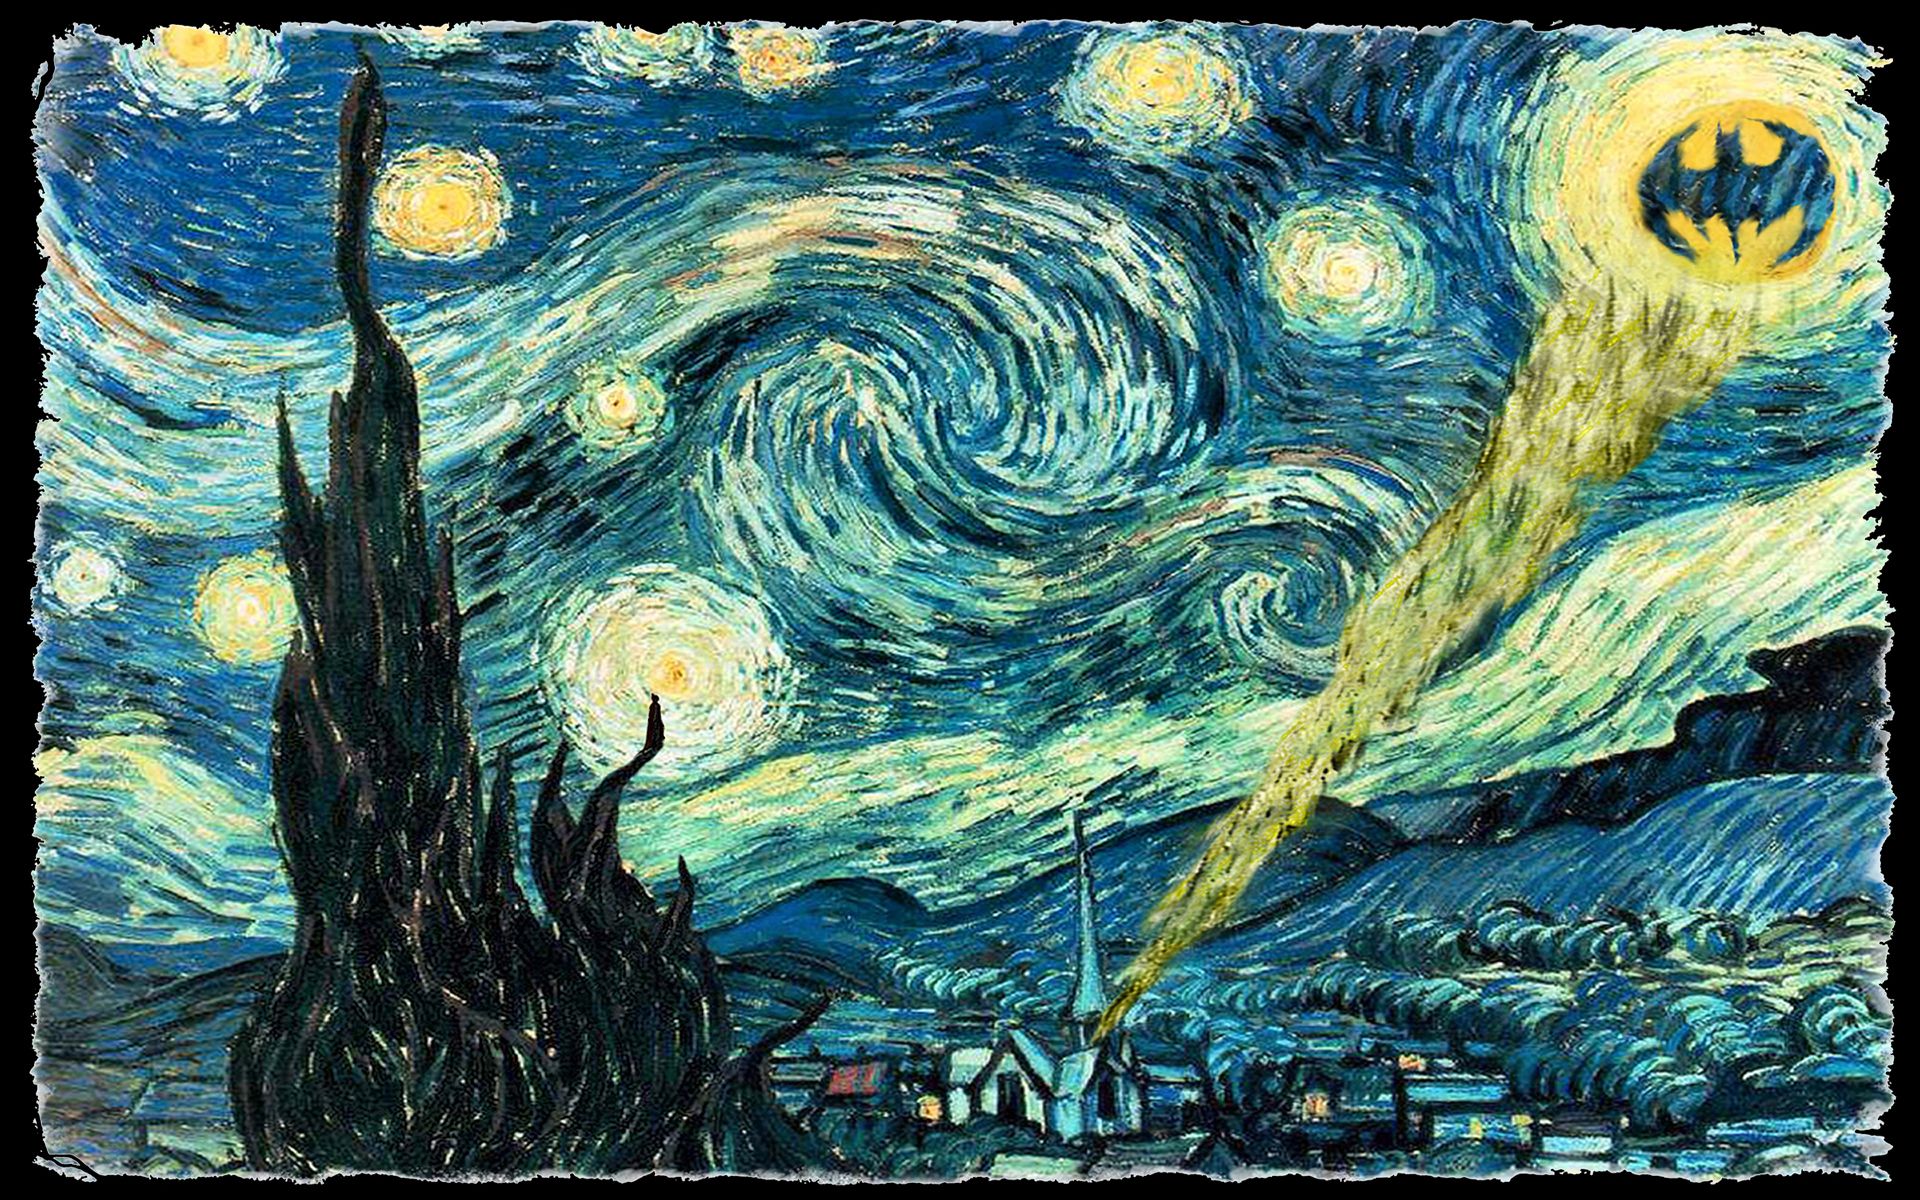 Starry Starry Night Wallpaper